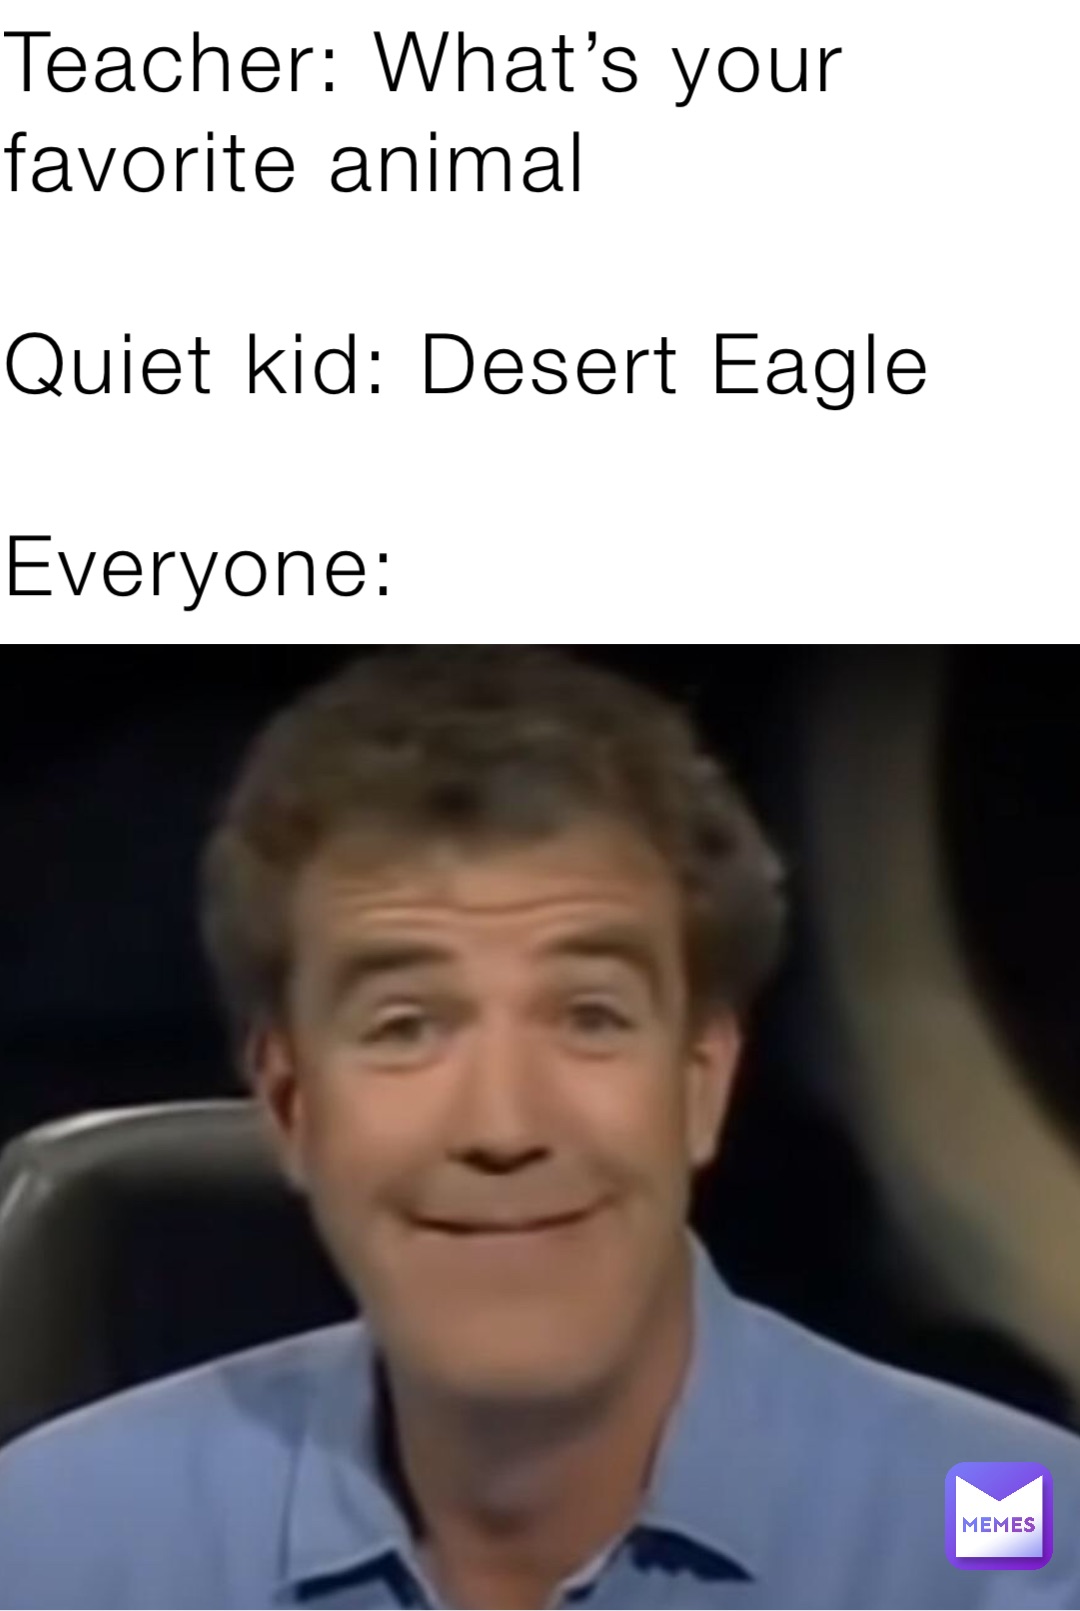 Teacher: What’s your favorite animal

Quiet kid: Desert Eagle

Everyone: